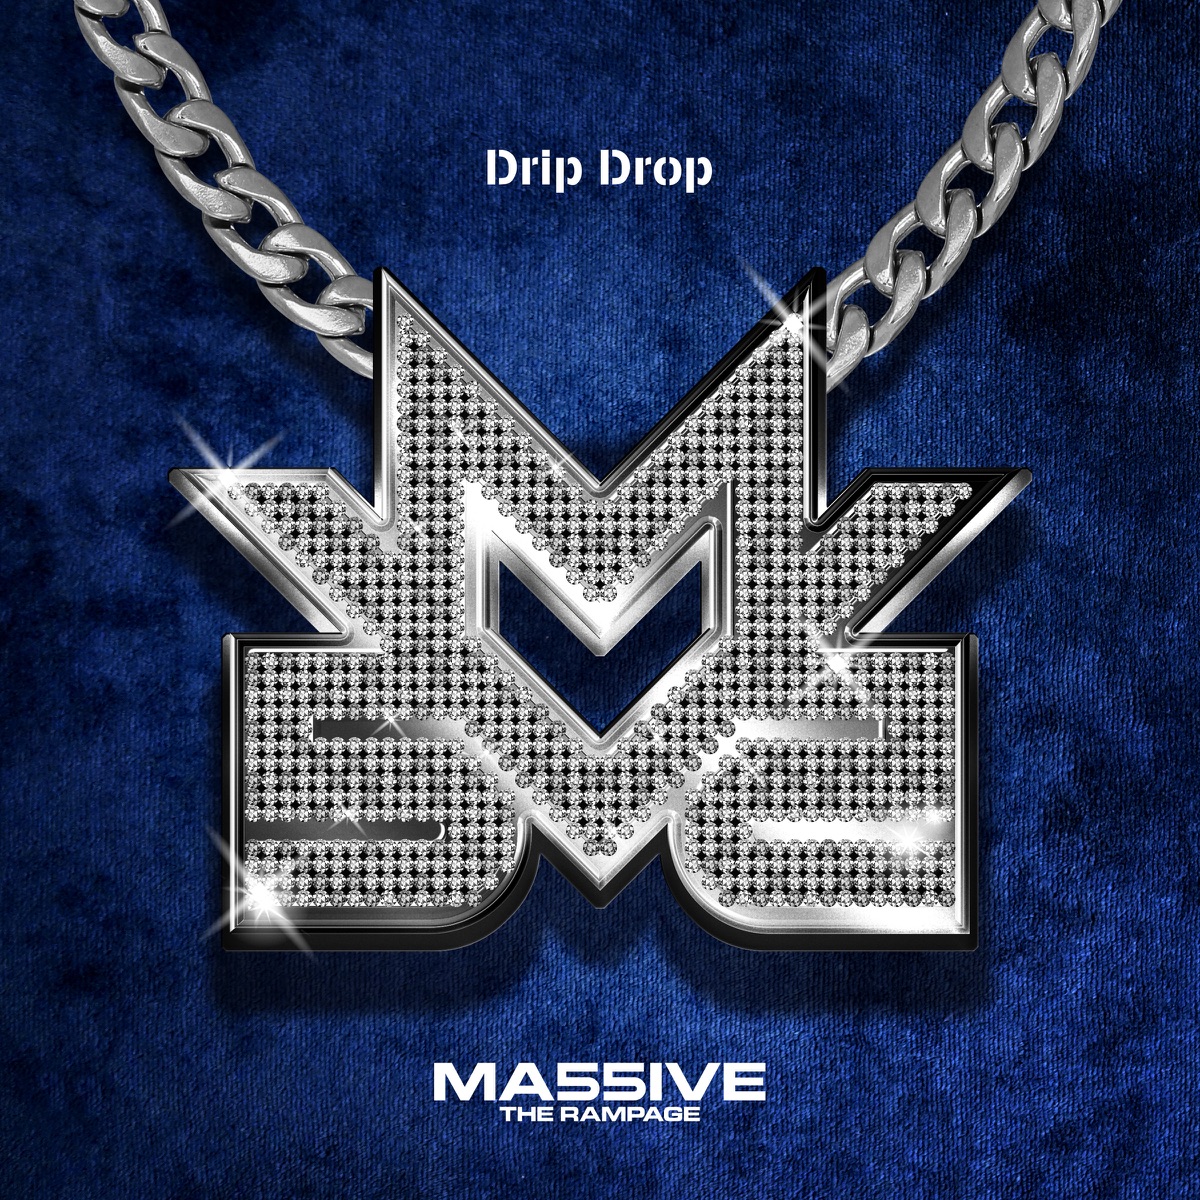 『MA55IVE THE RAMPAGE - Drip Drop』収録の『Drip Drop』ジャケット